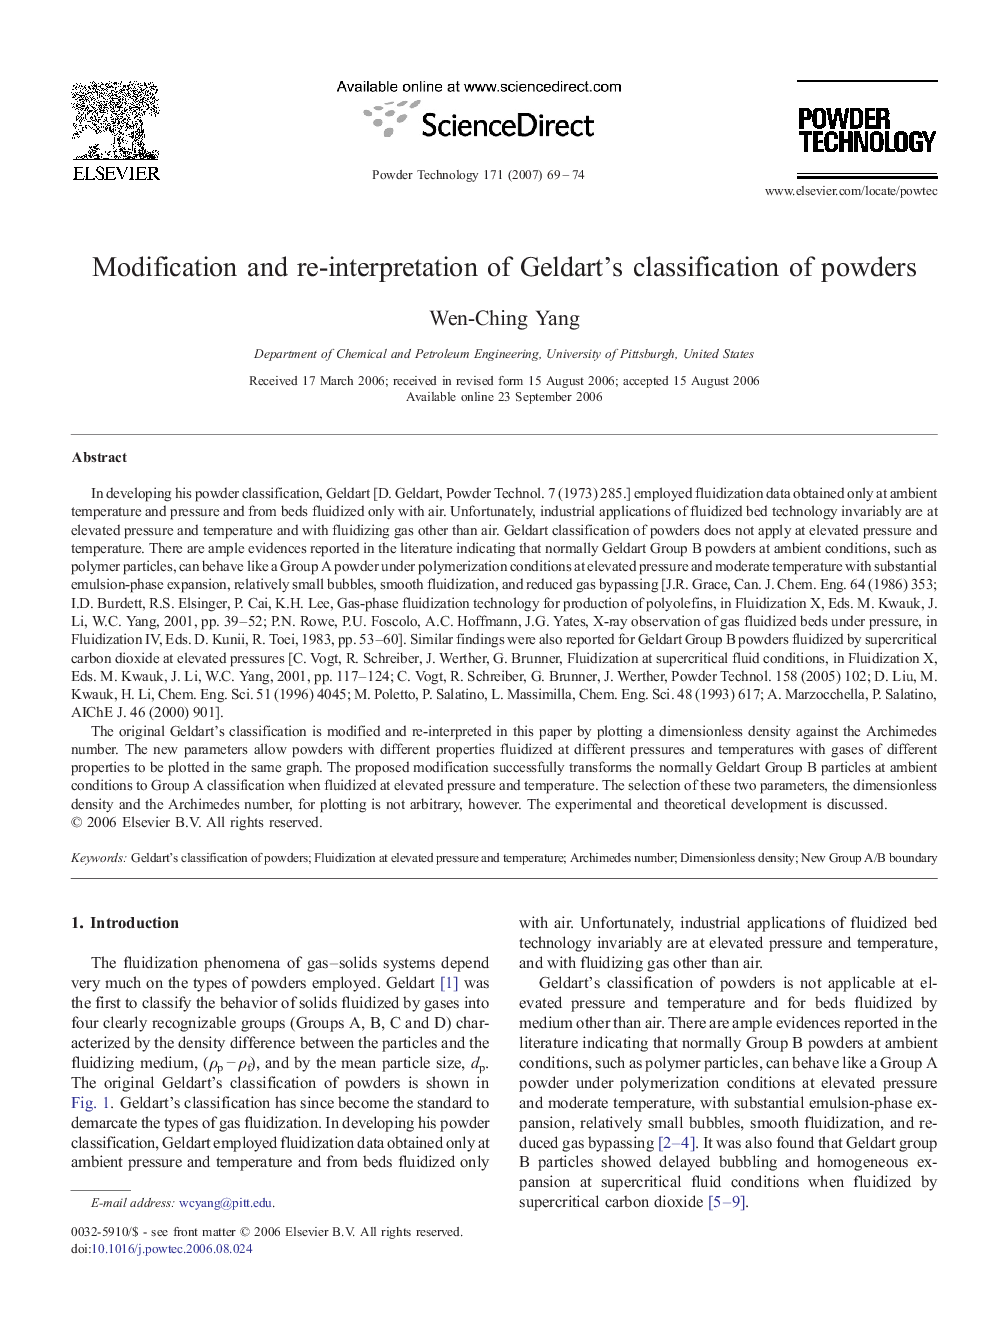 Modification and re-interpretation of Geldart's classification of powders